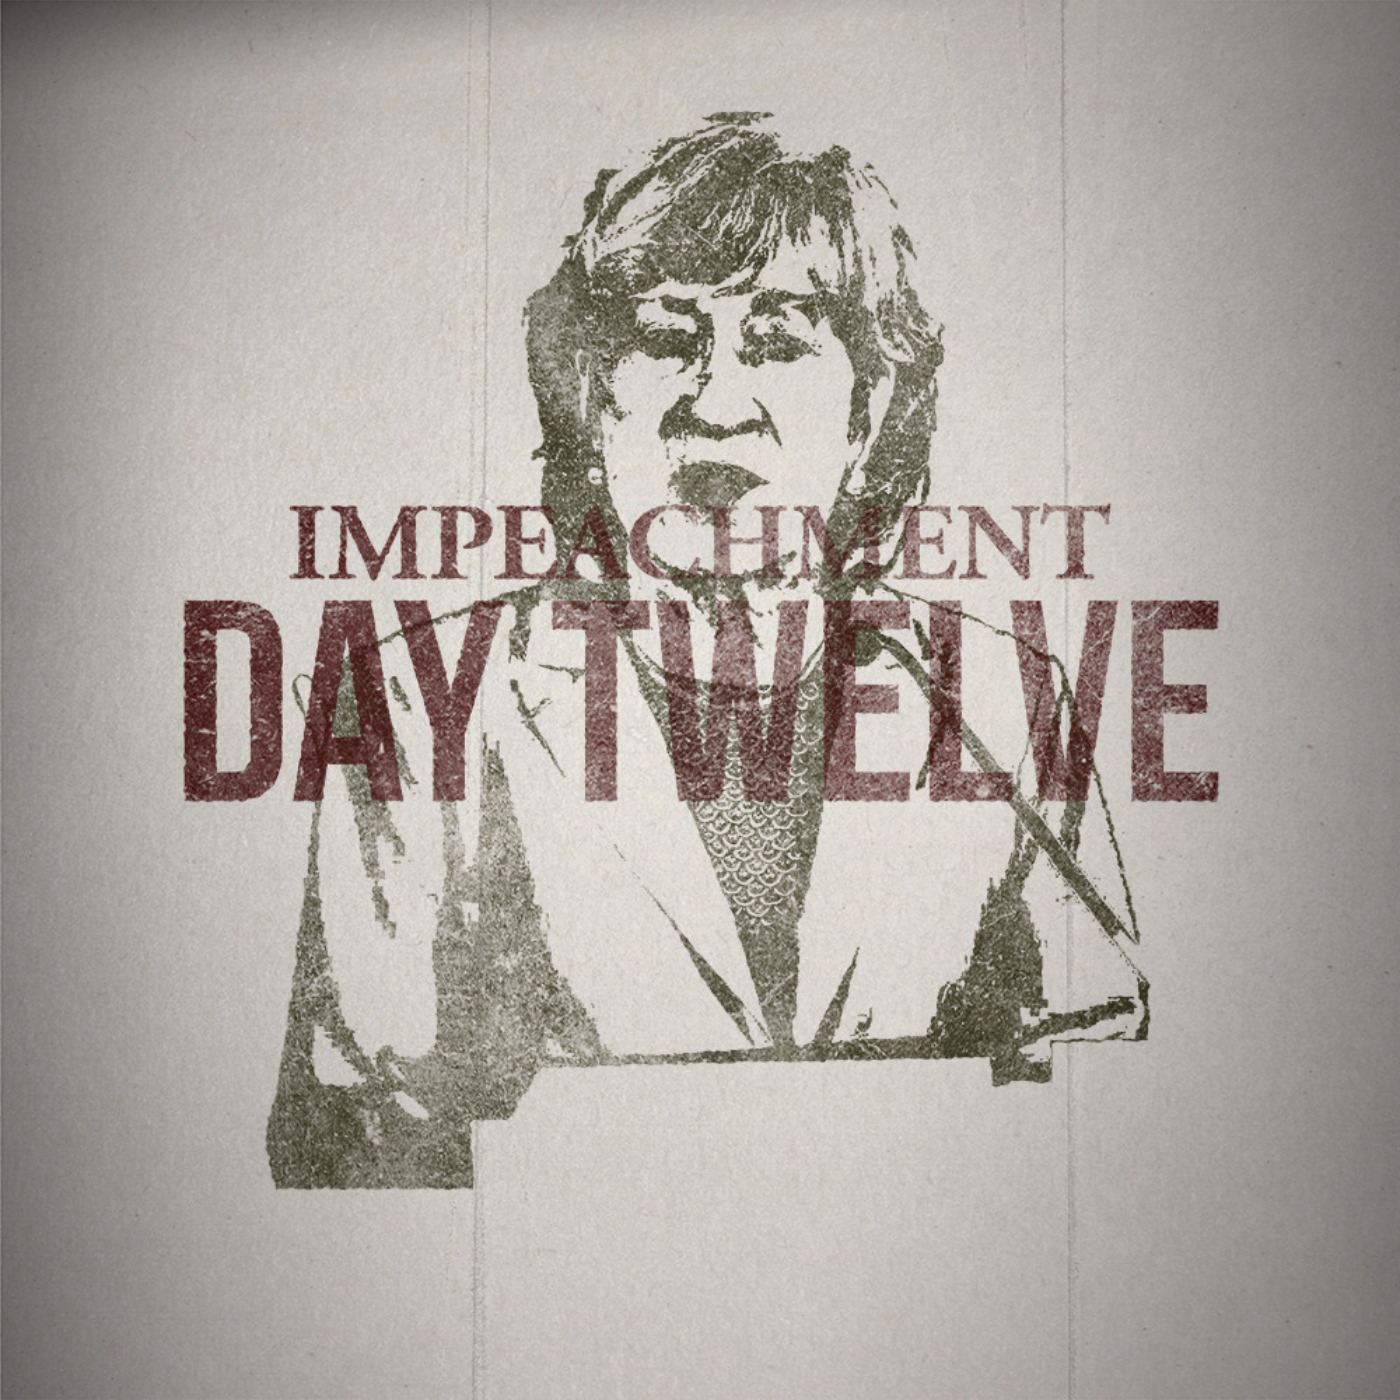 The Impeachment: Day 12